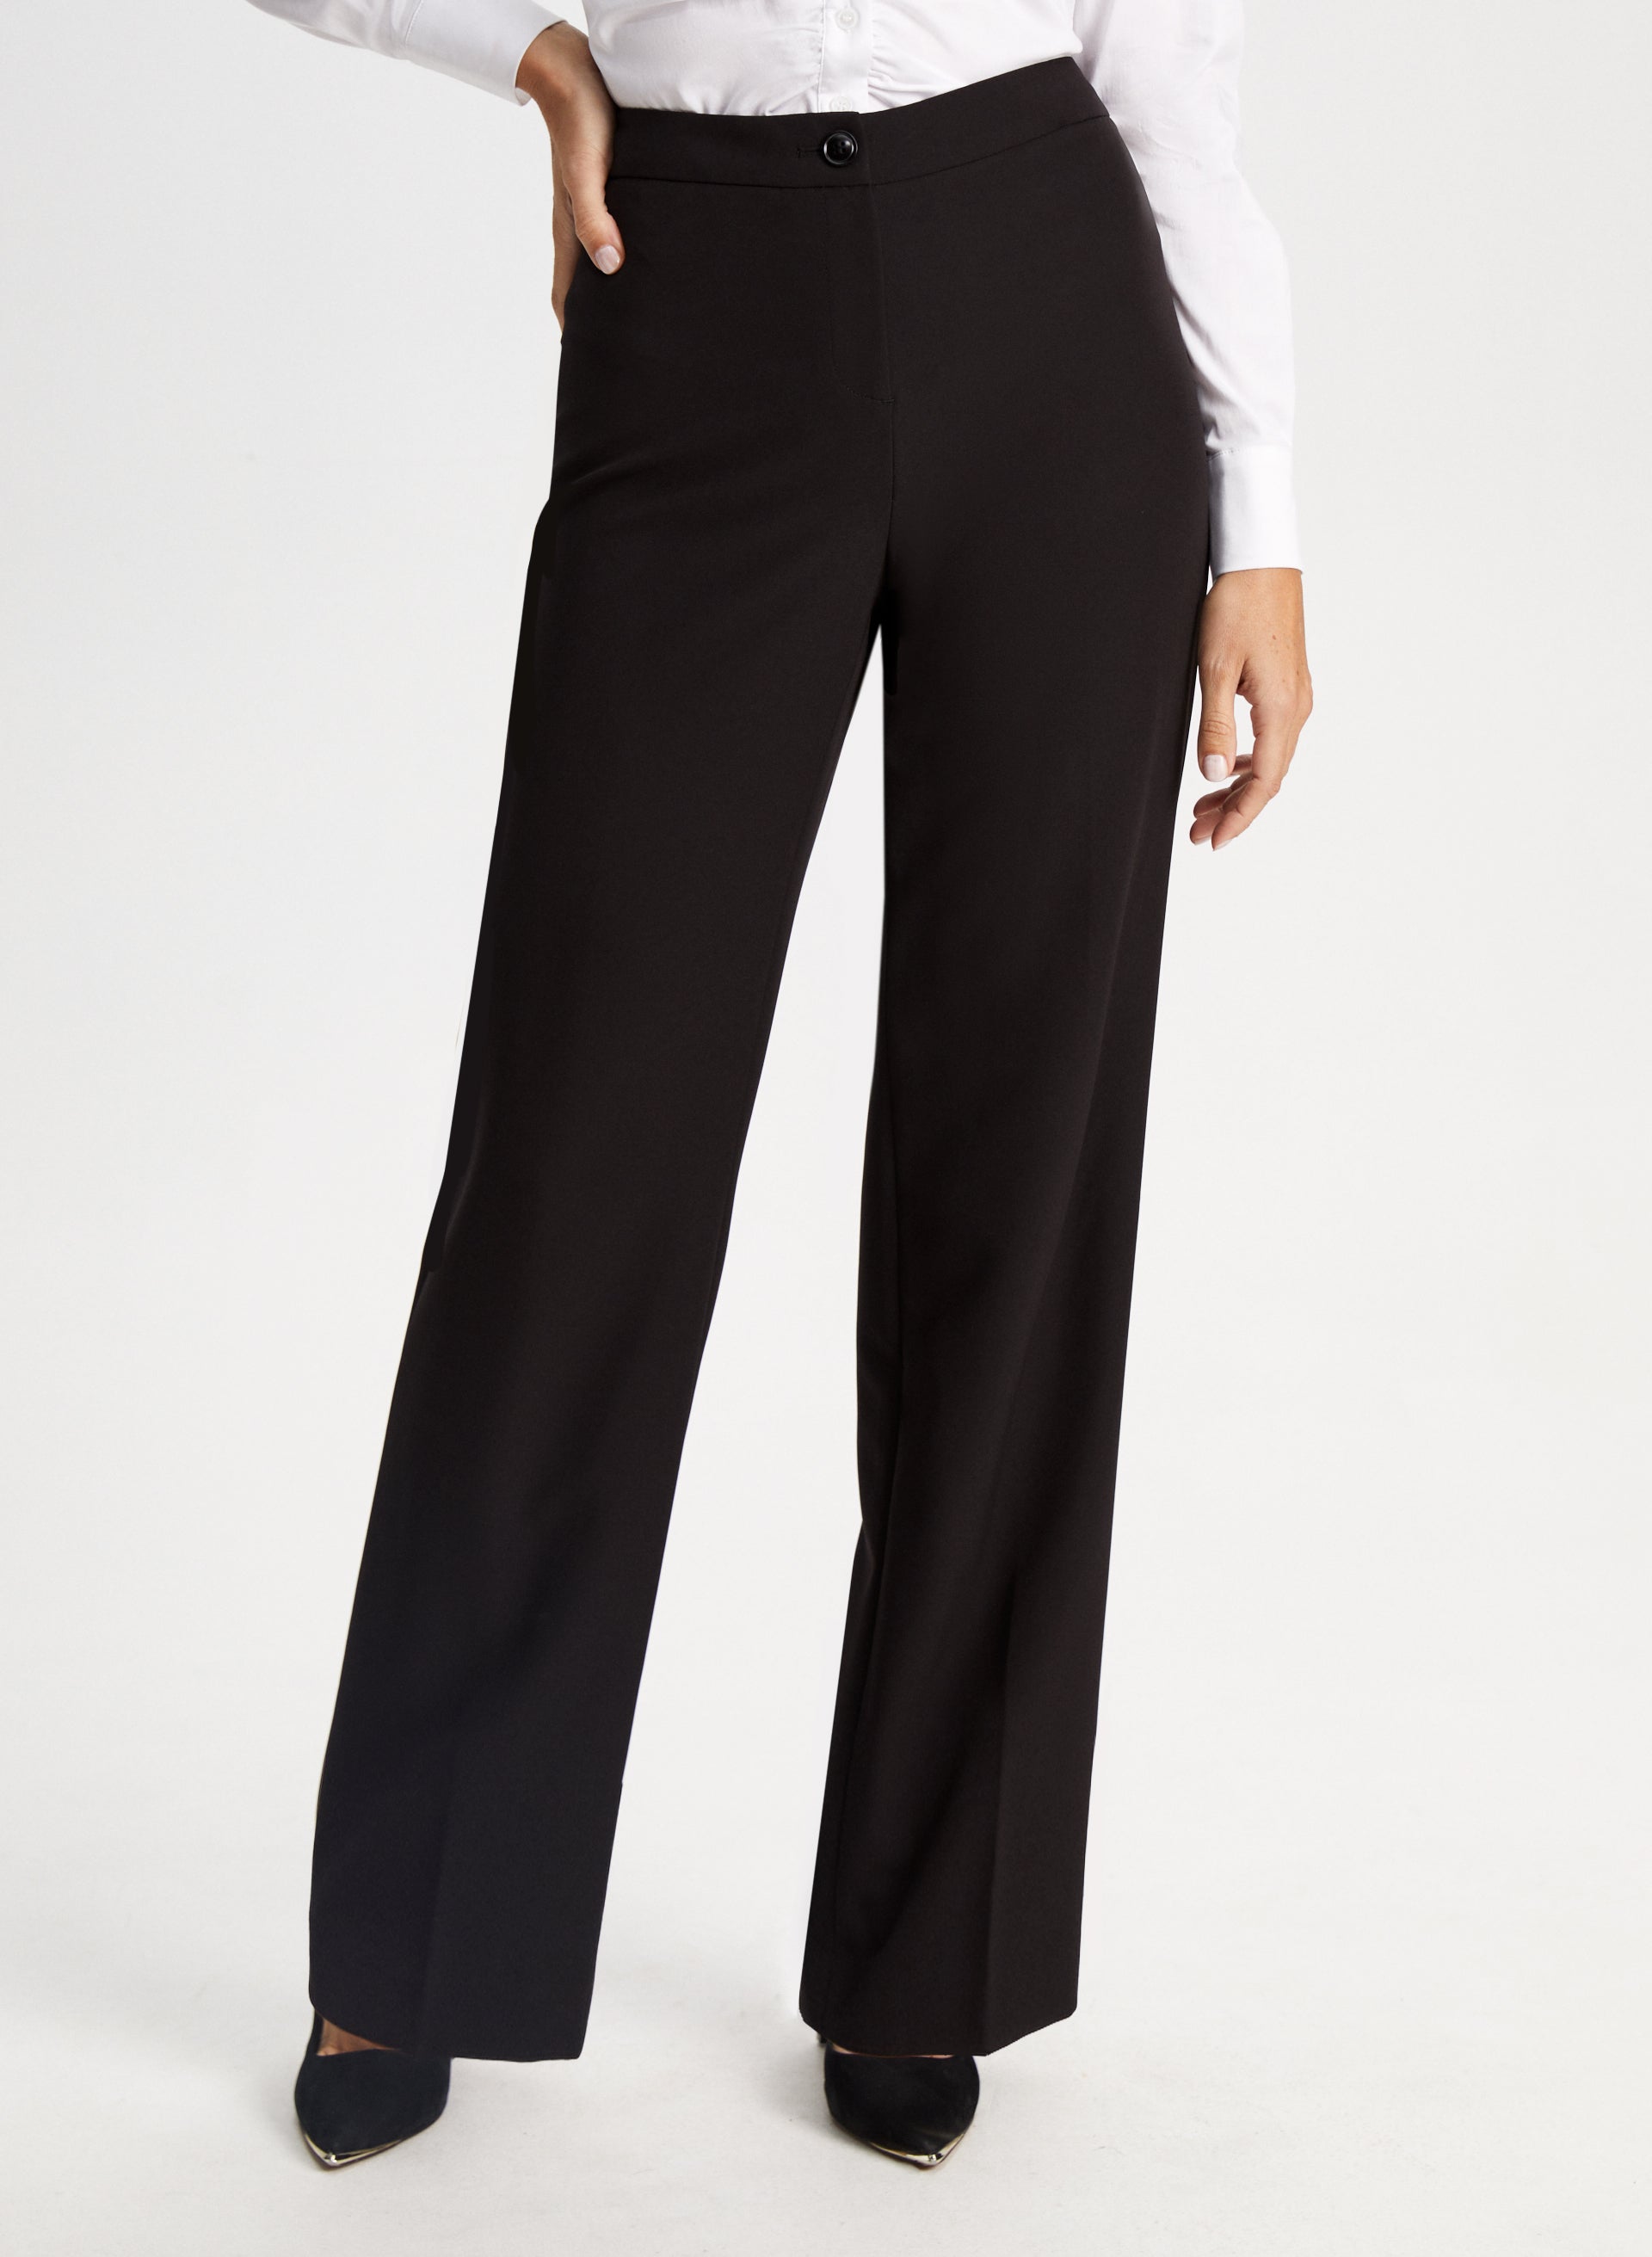 Bigersell Women's Modern Straight Pants Full Length Pants Women's